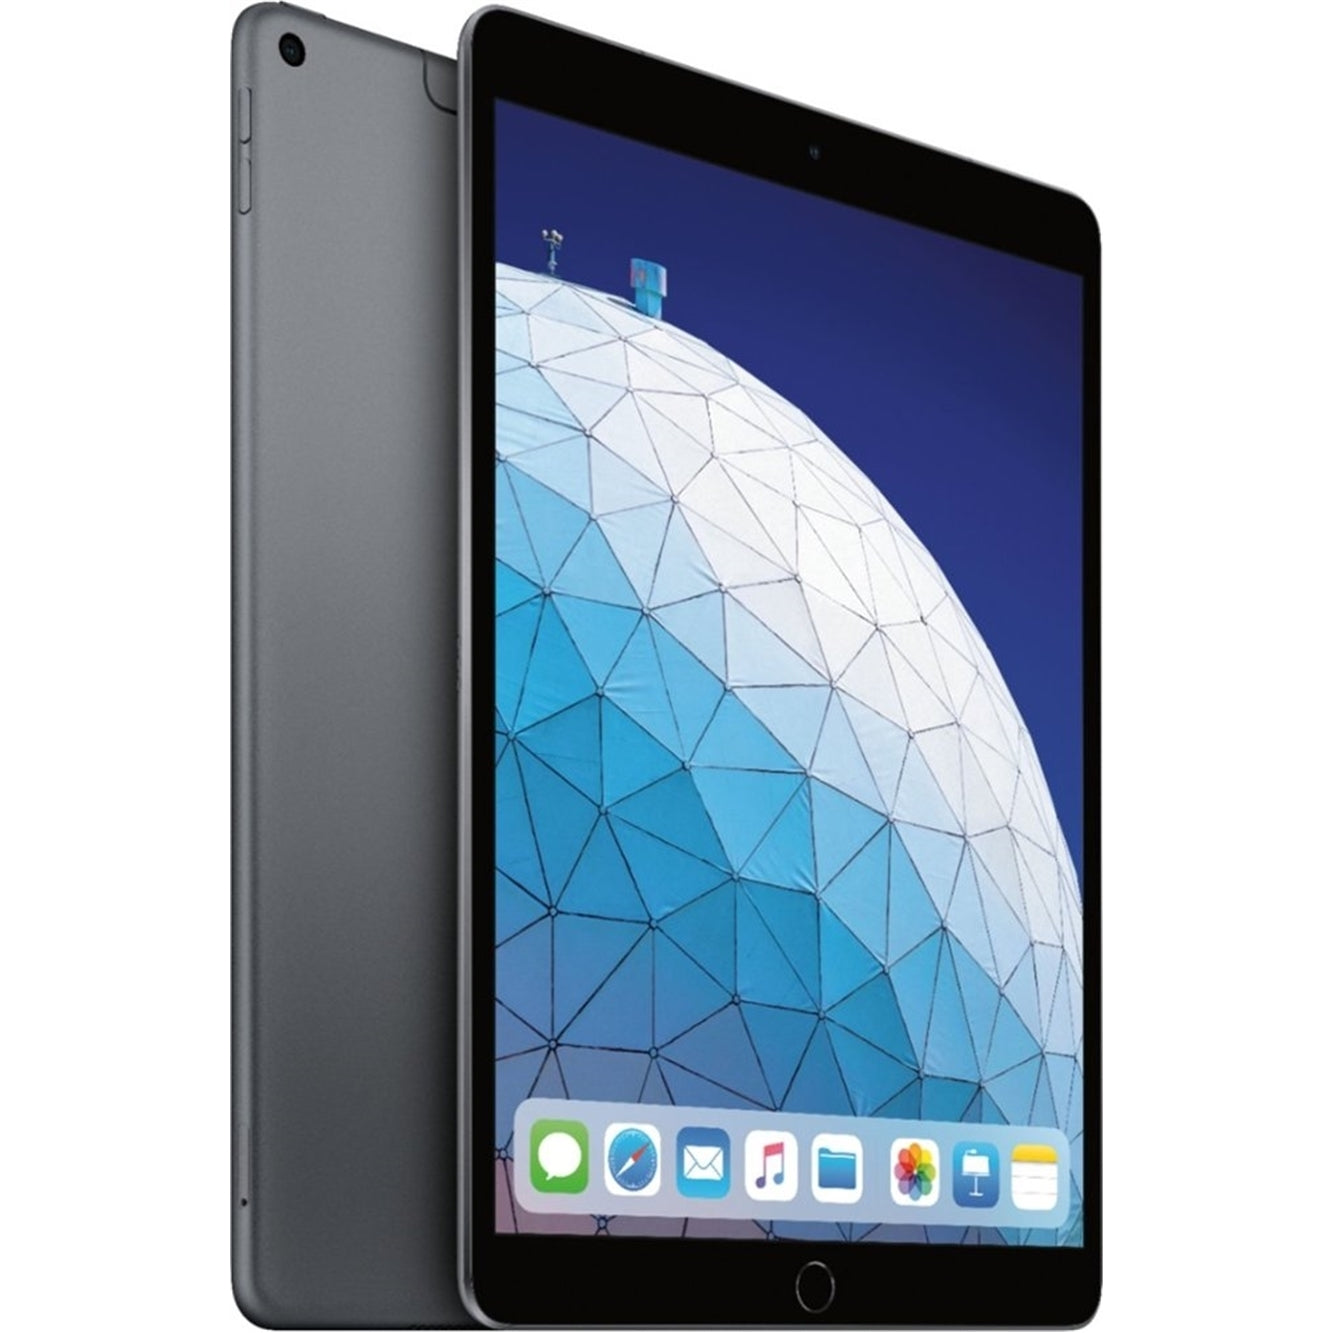 Apple iPad Air 3 10.5" Tablet 64GB WiFi + 4G LTE, Space Gray (Certifie